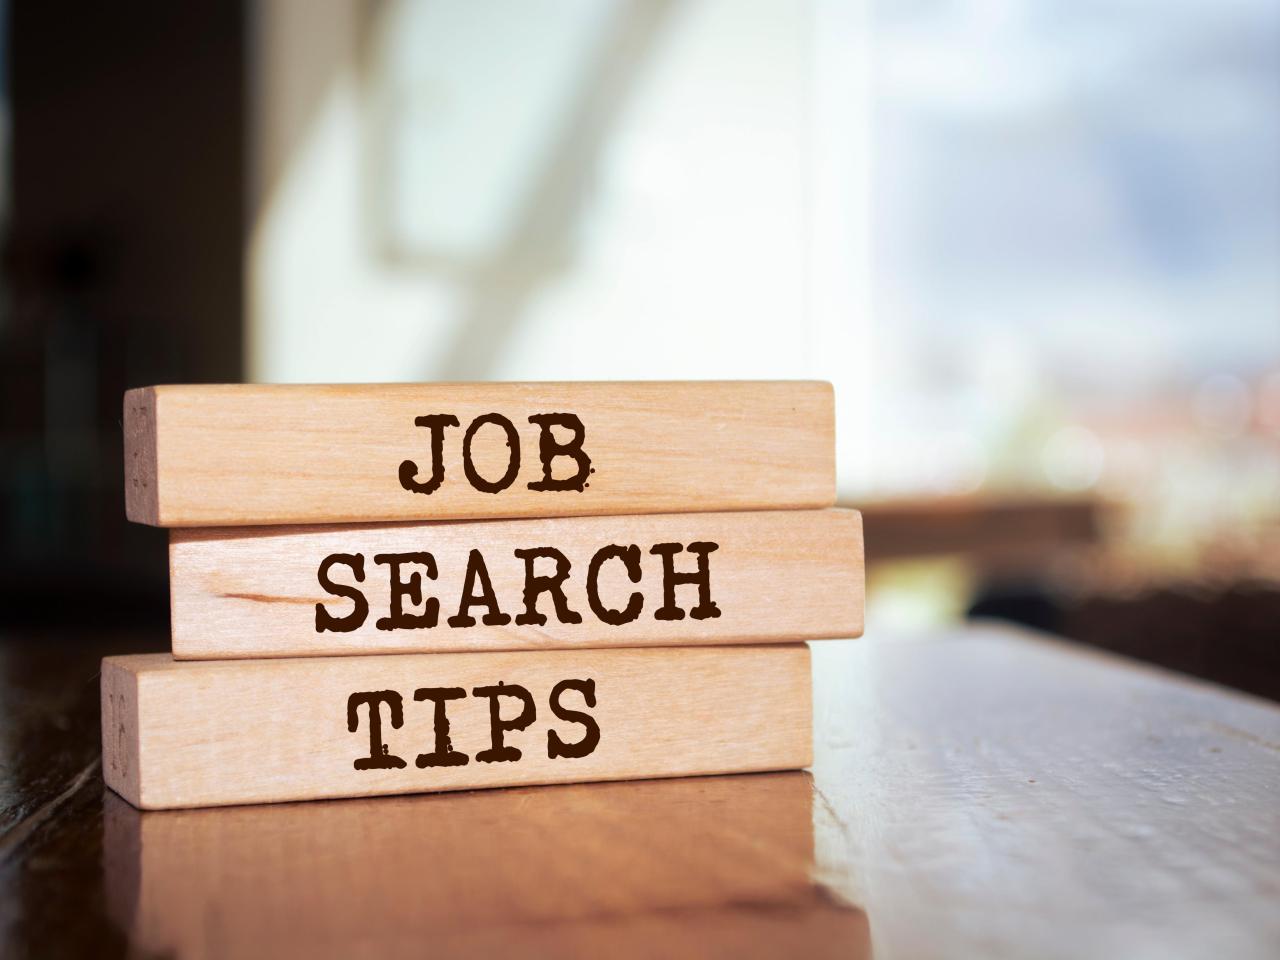 Job Search Tips on wooden blocks